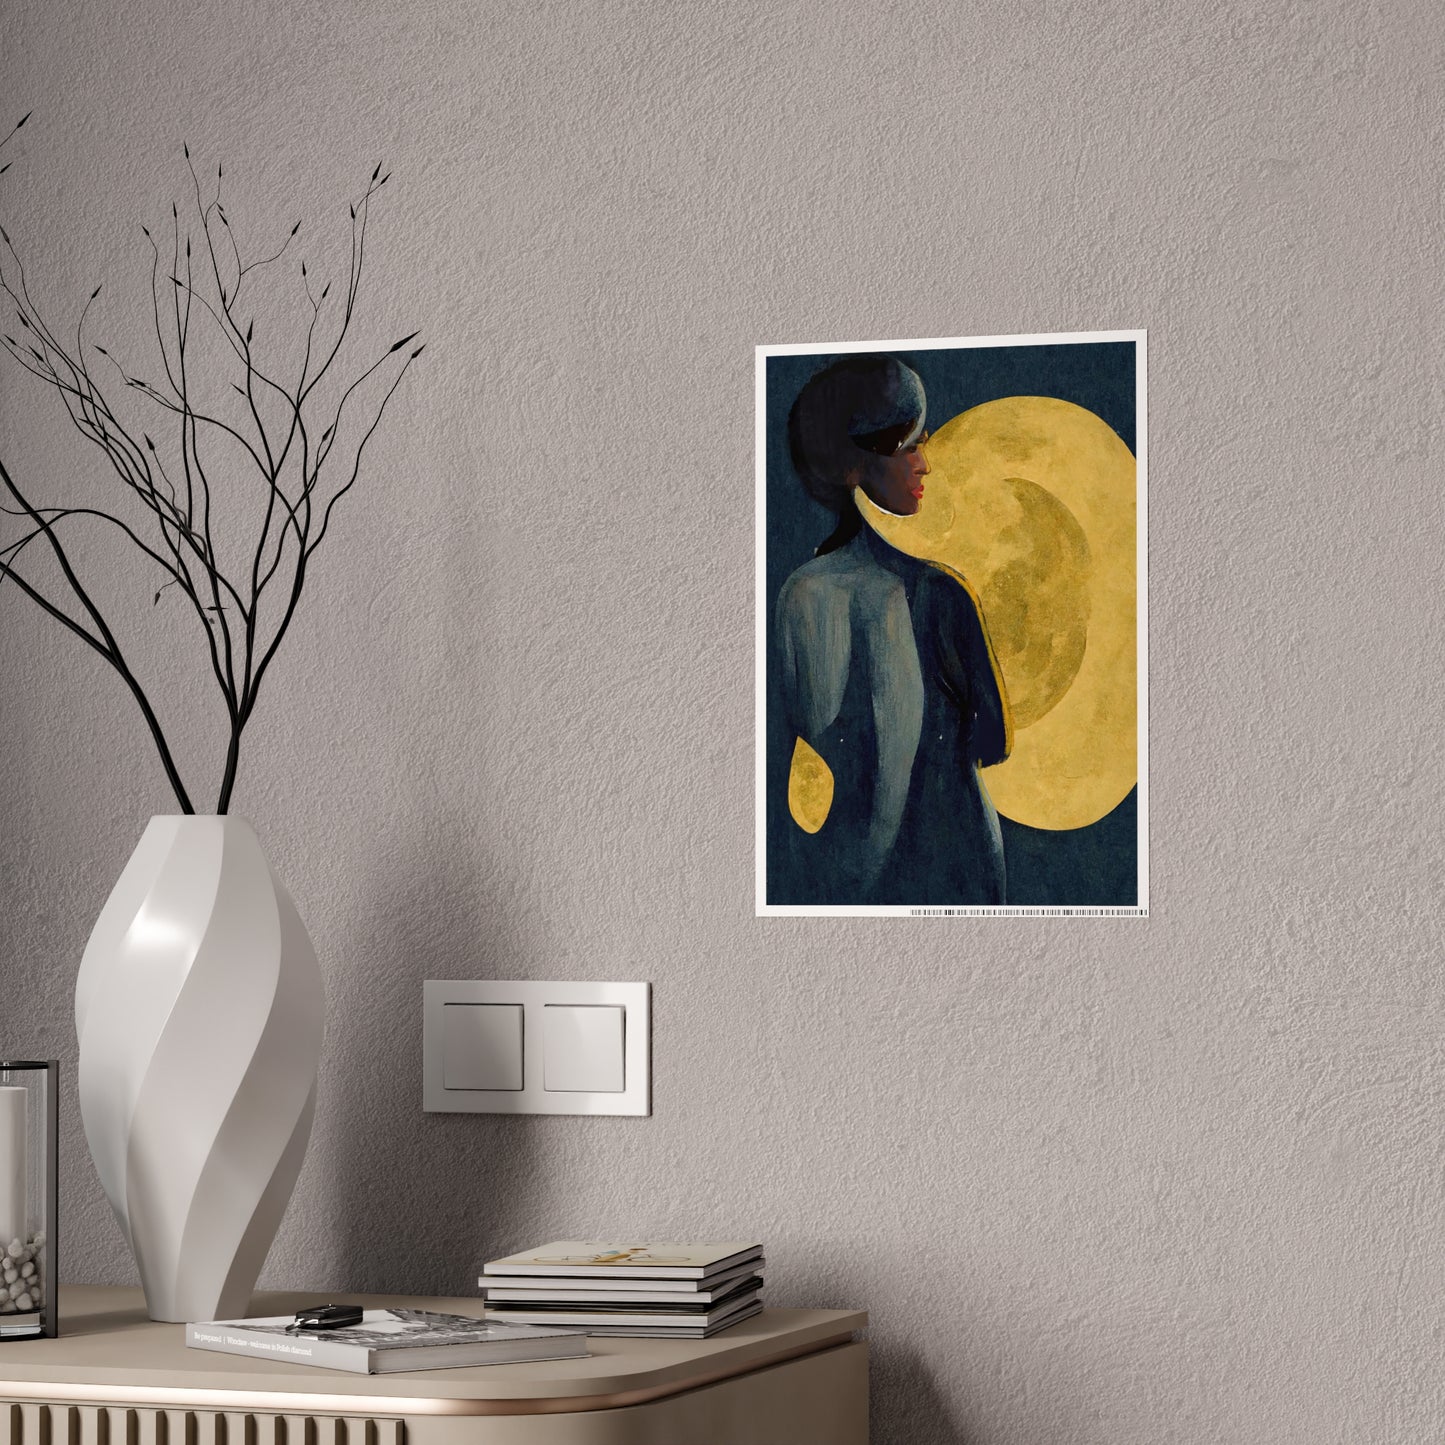 "Bathe in Moonlight" Gloss Poster